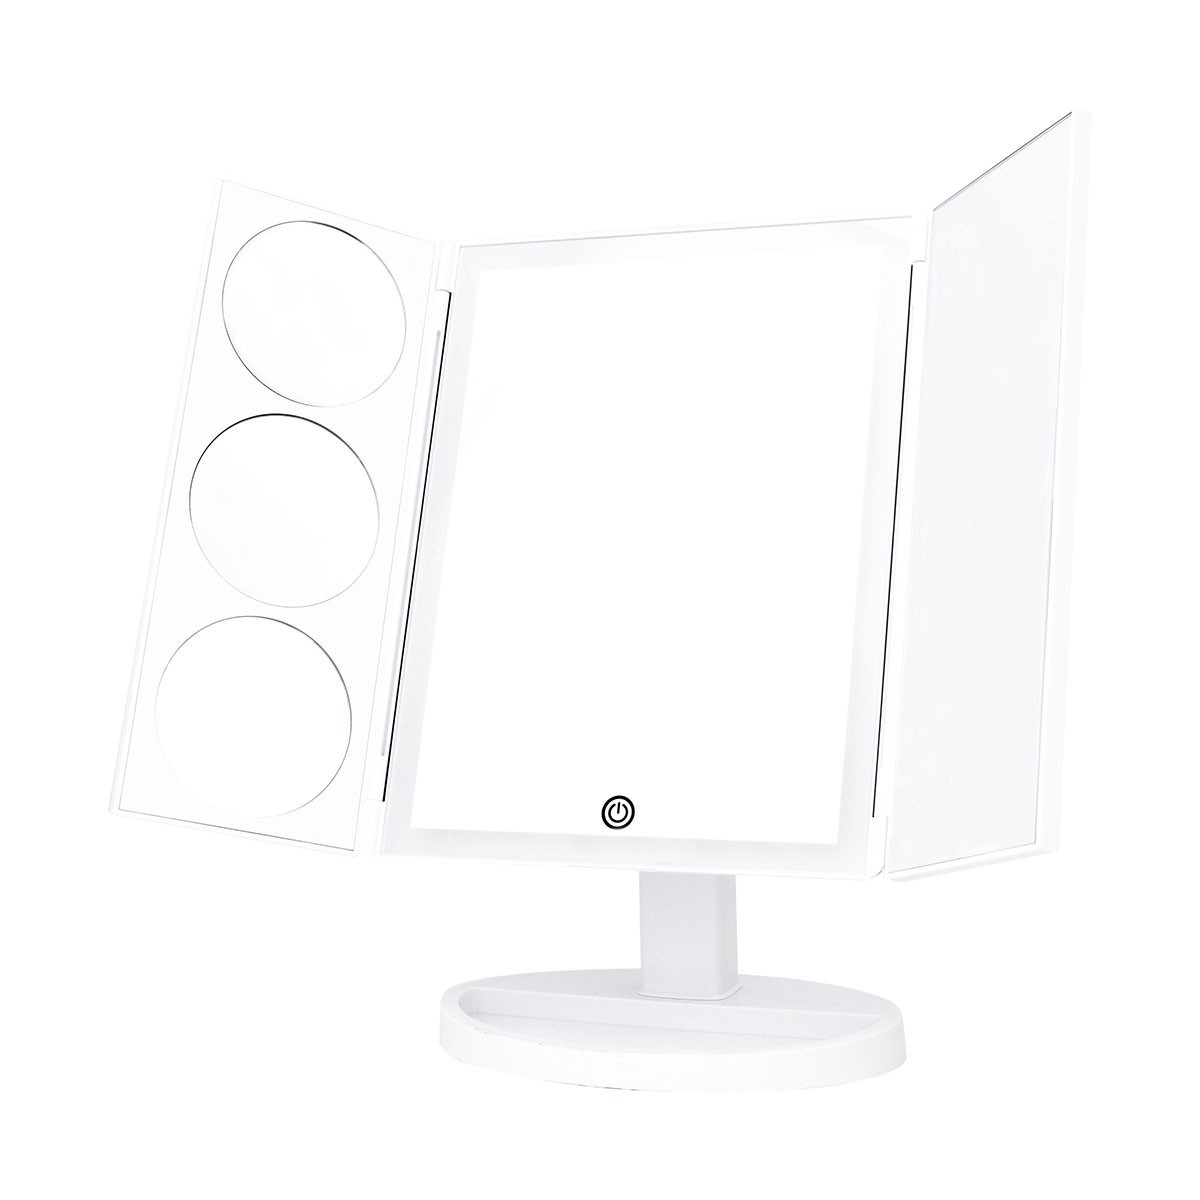 D1023wt Led Oversize Cosmetic Vanity Mirror, White